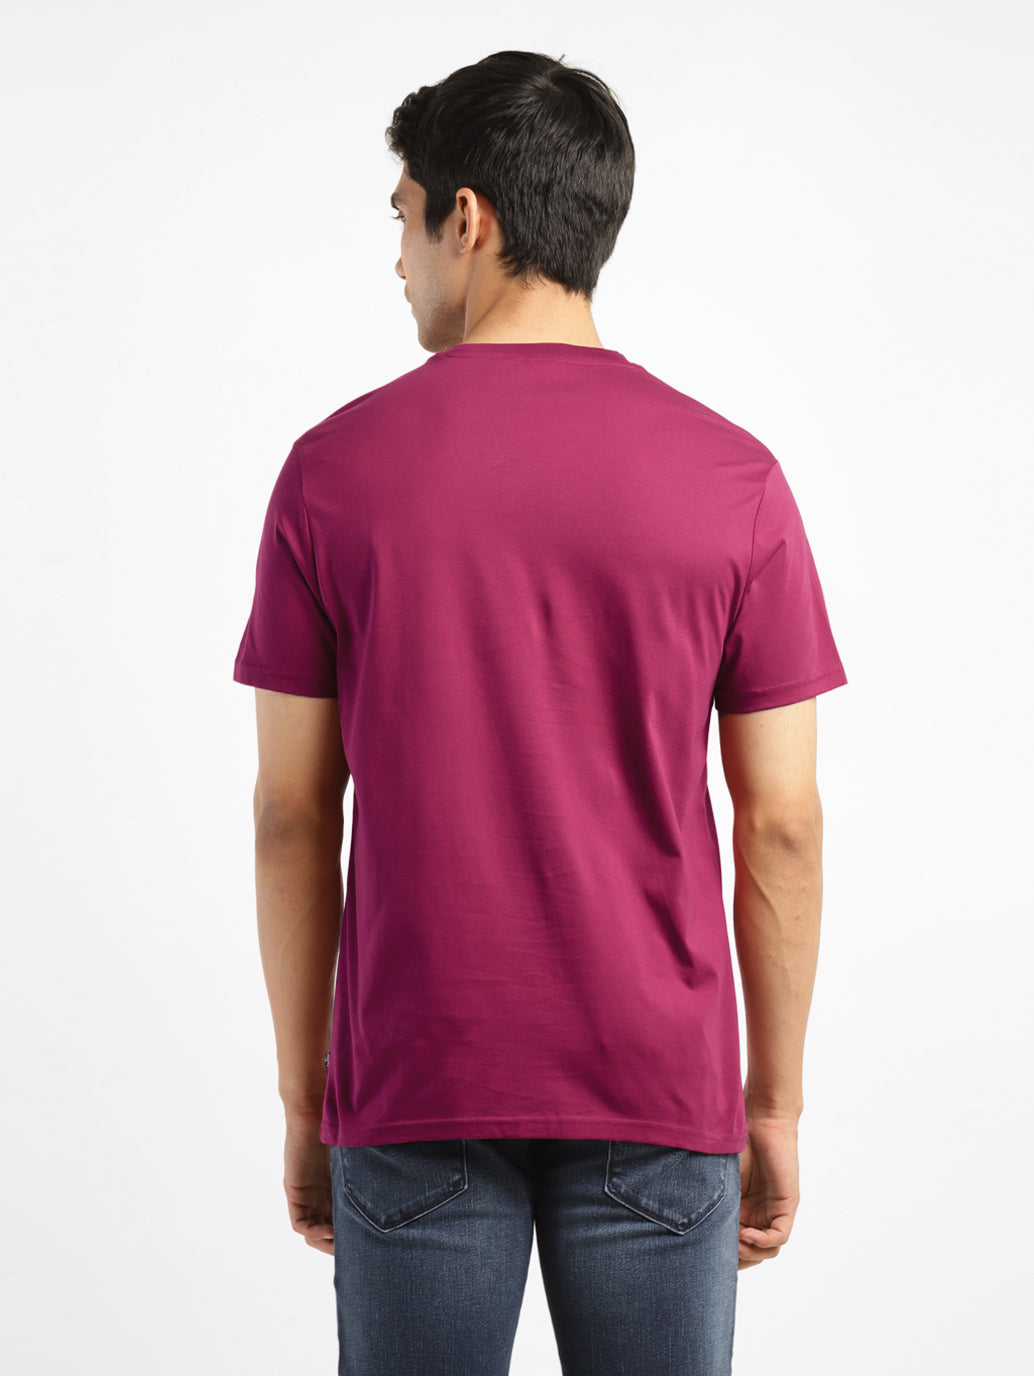 Men's Graphic Round Neck T-shirt